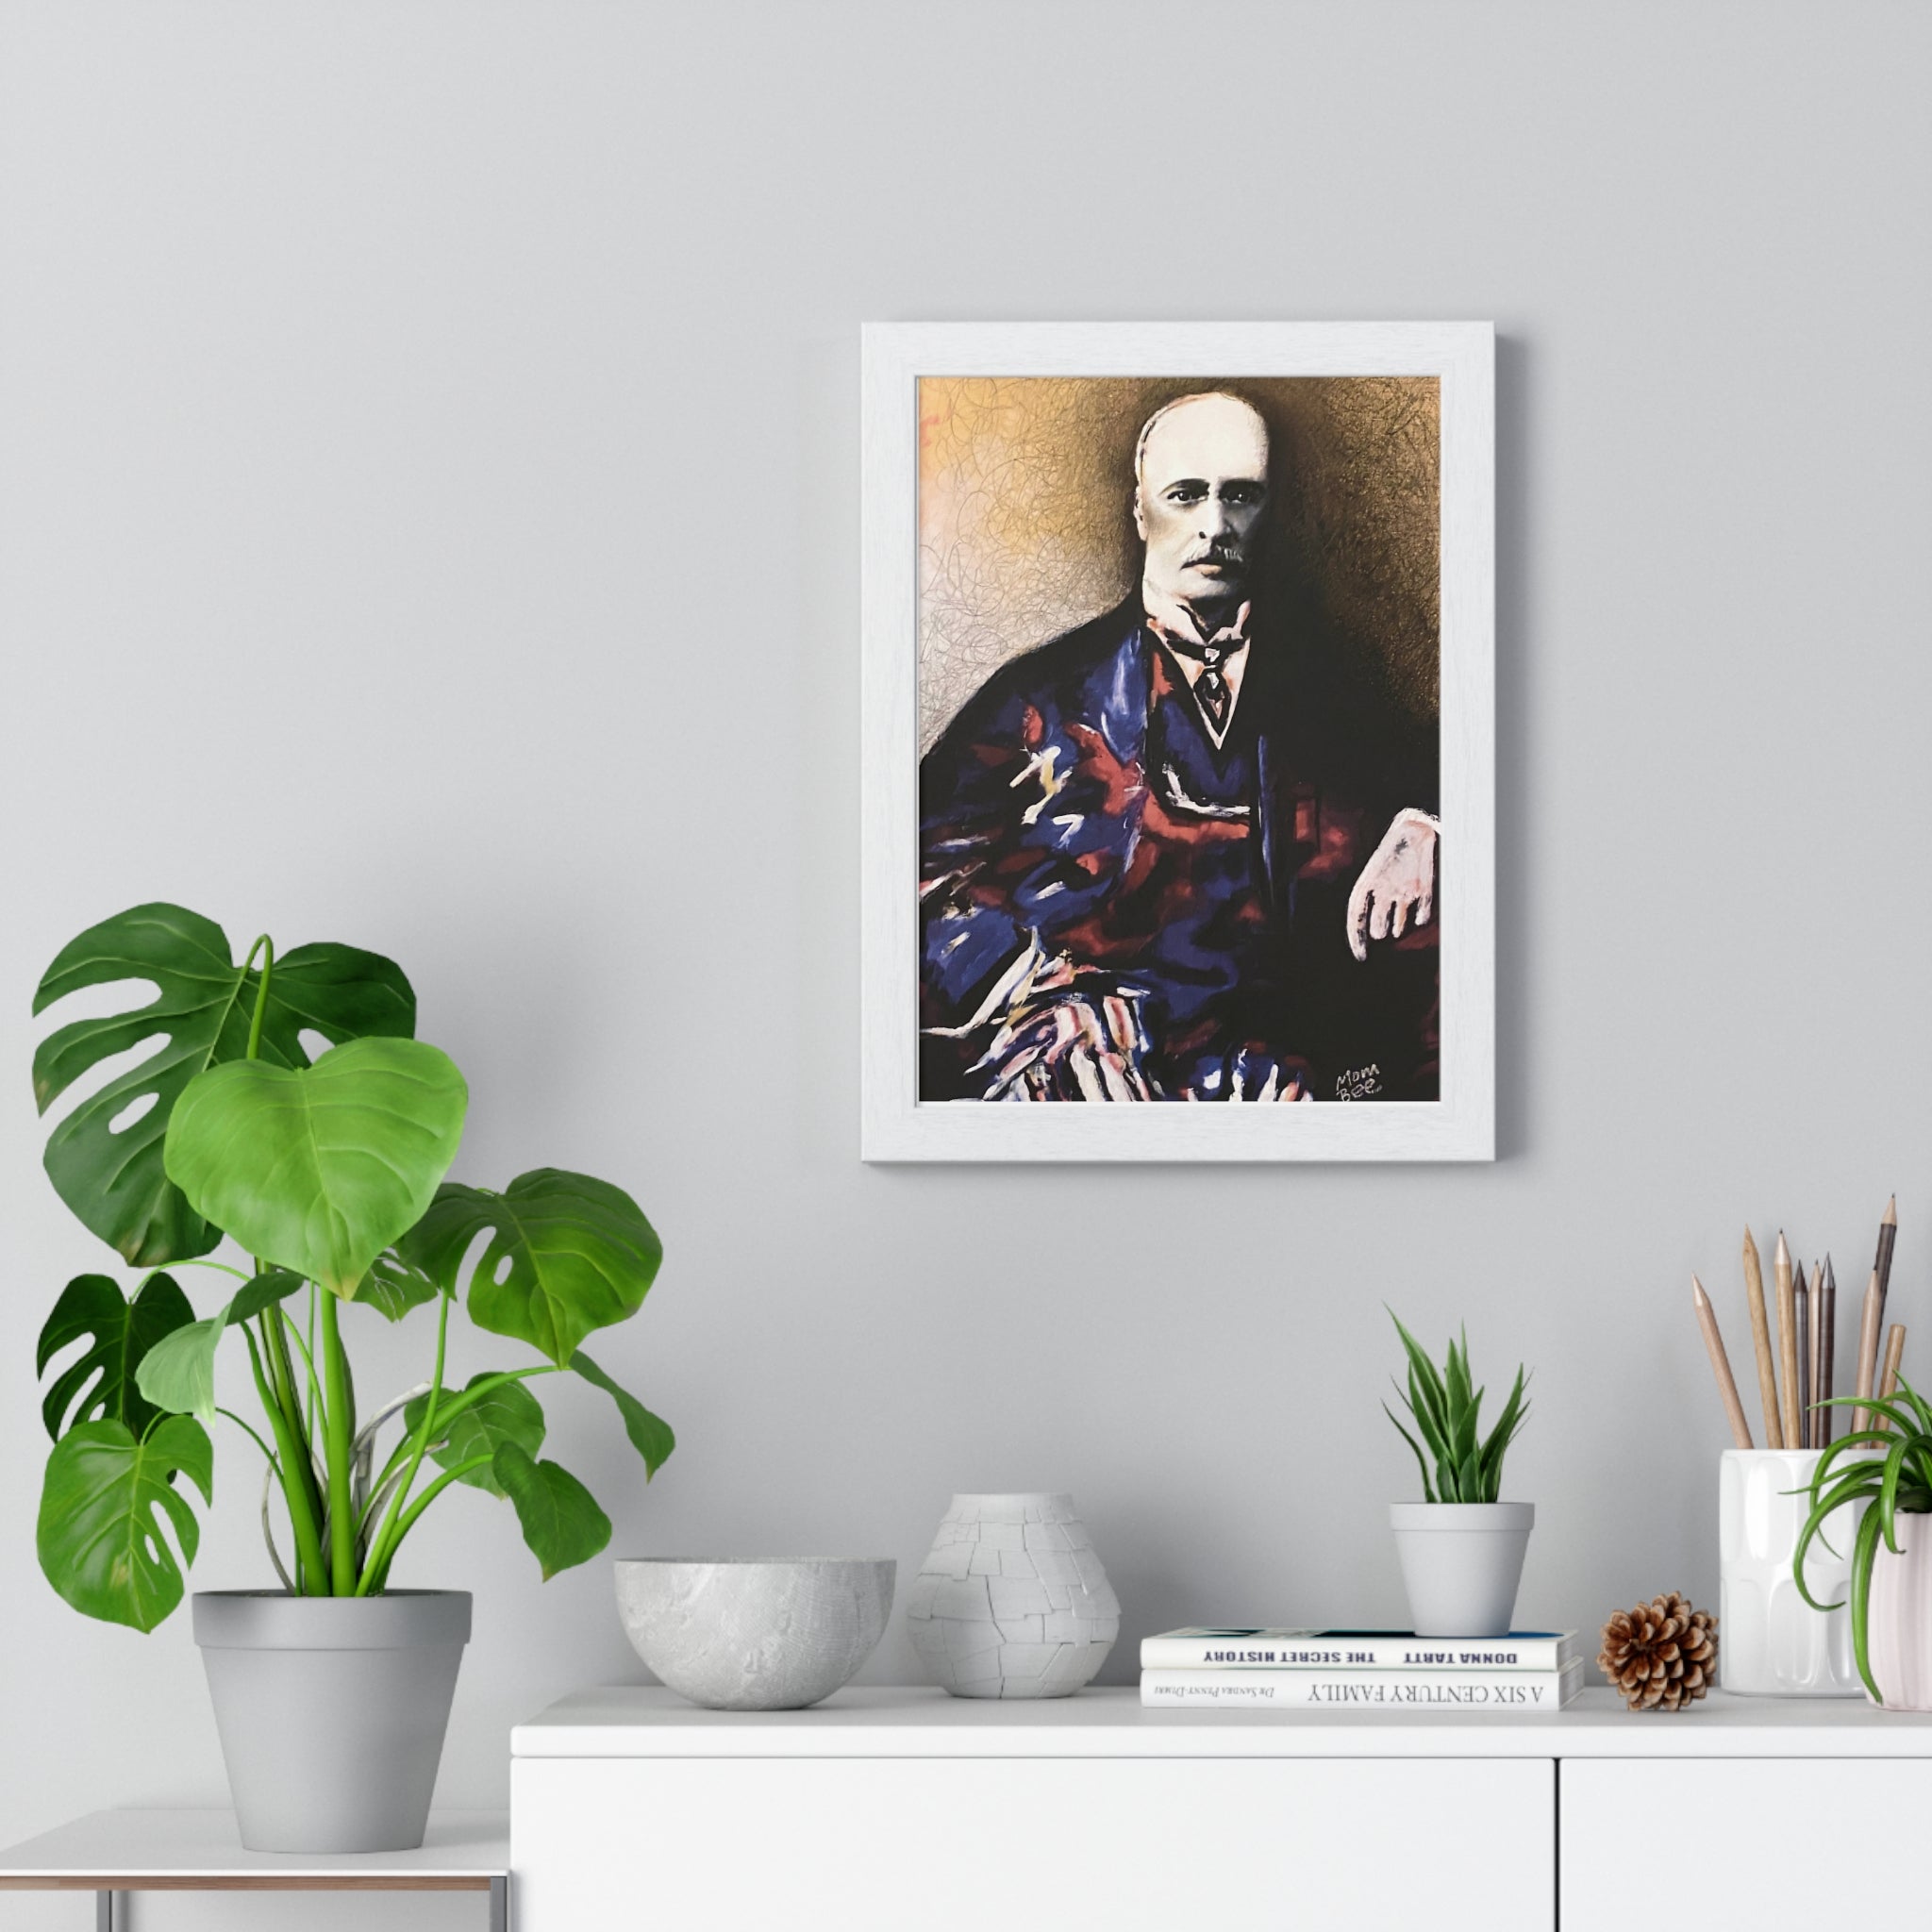 Design Poster Motiv Rudolf Diesel